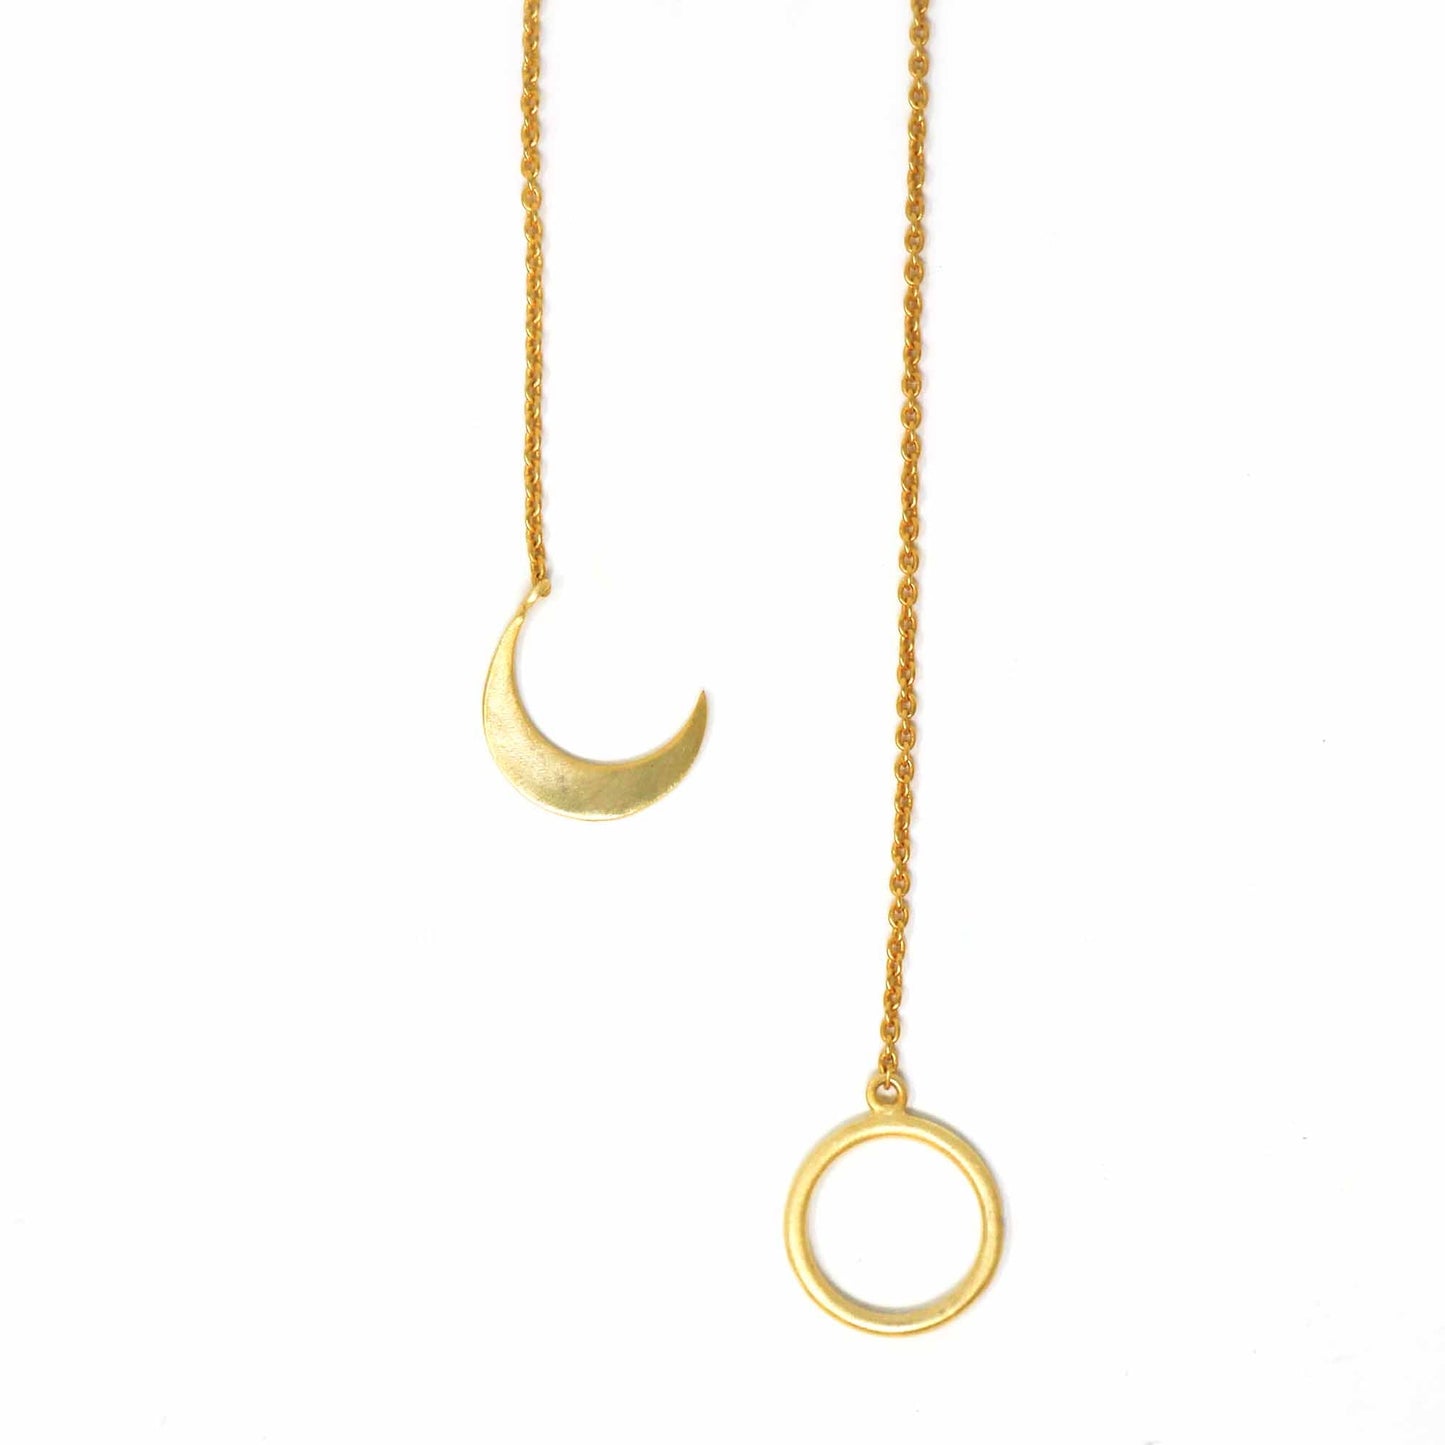 Crescent Moon Goldtone Pendant Necklace